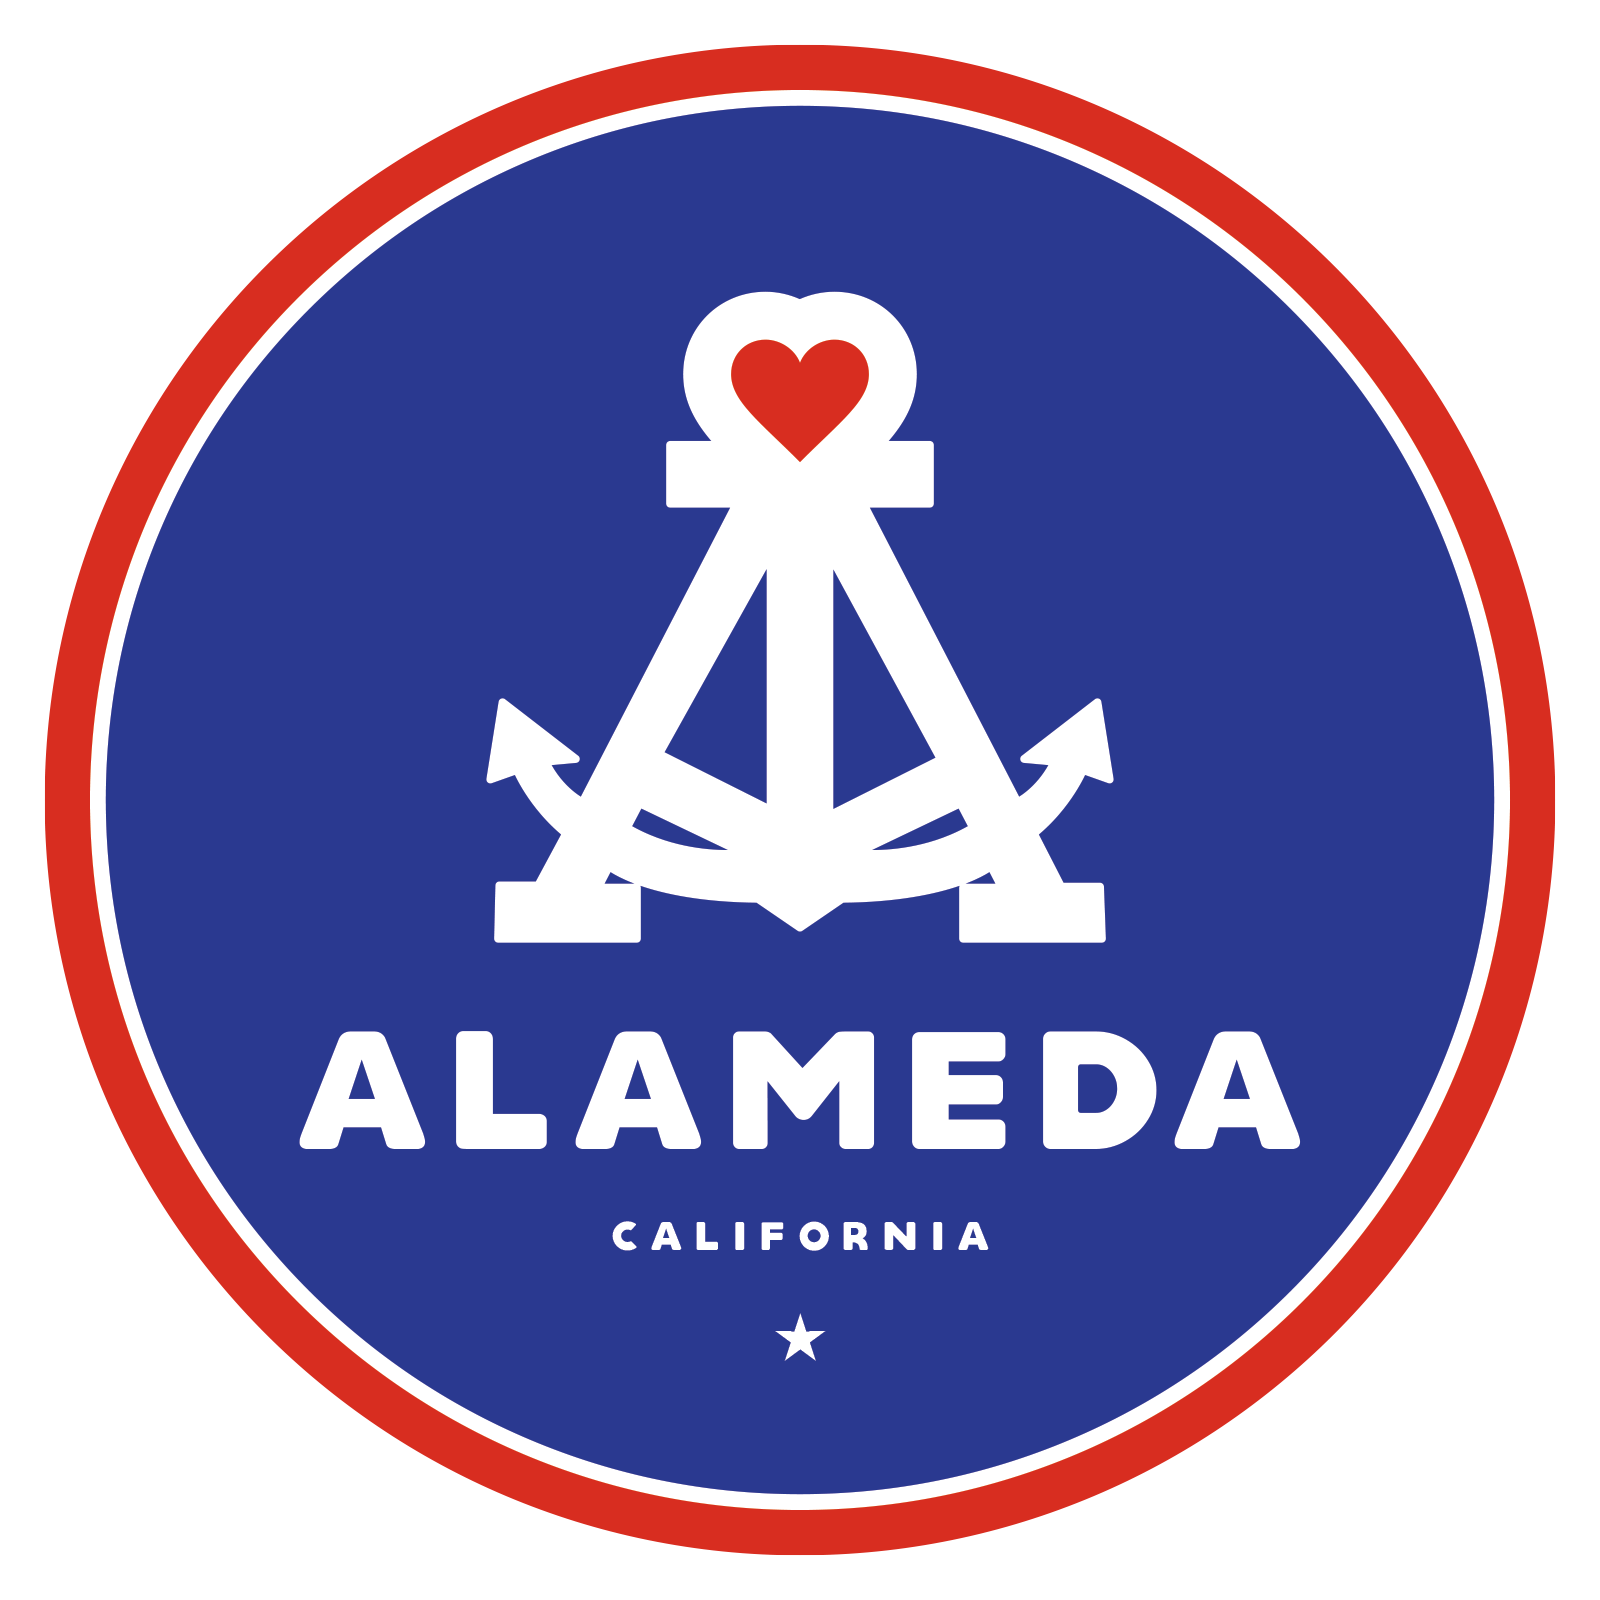 City of Alameda, CA - Official Seal or Logo